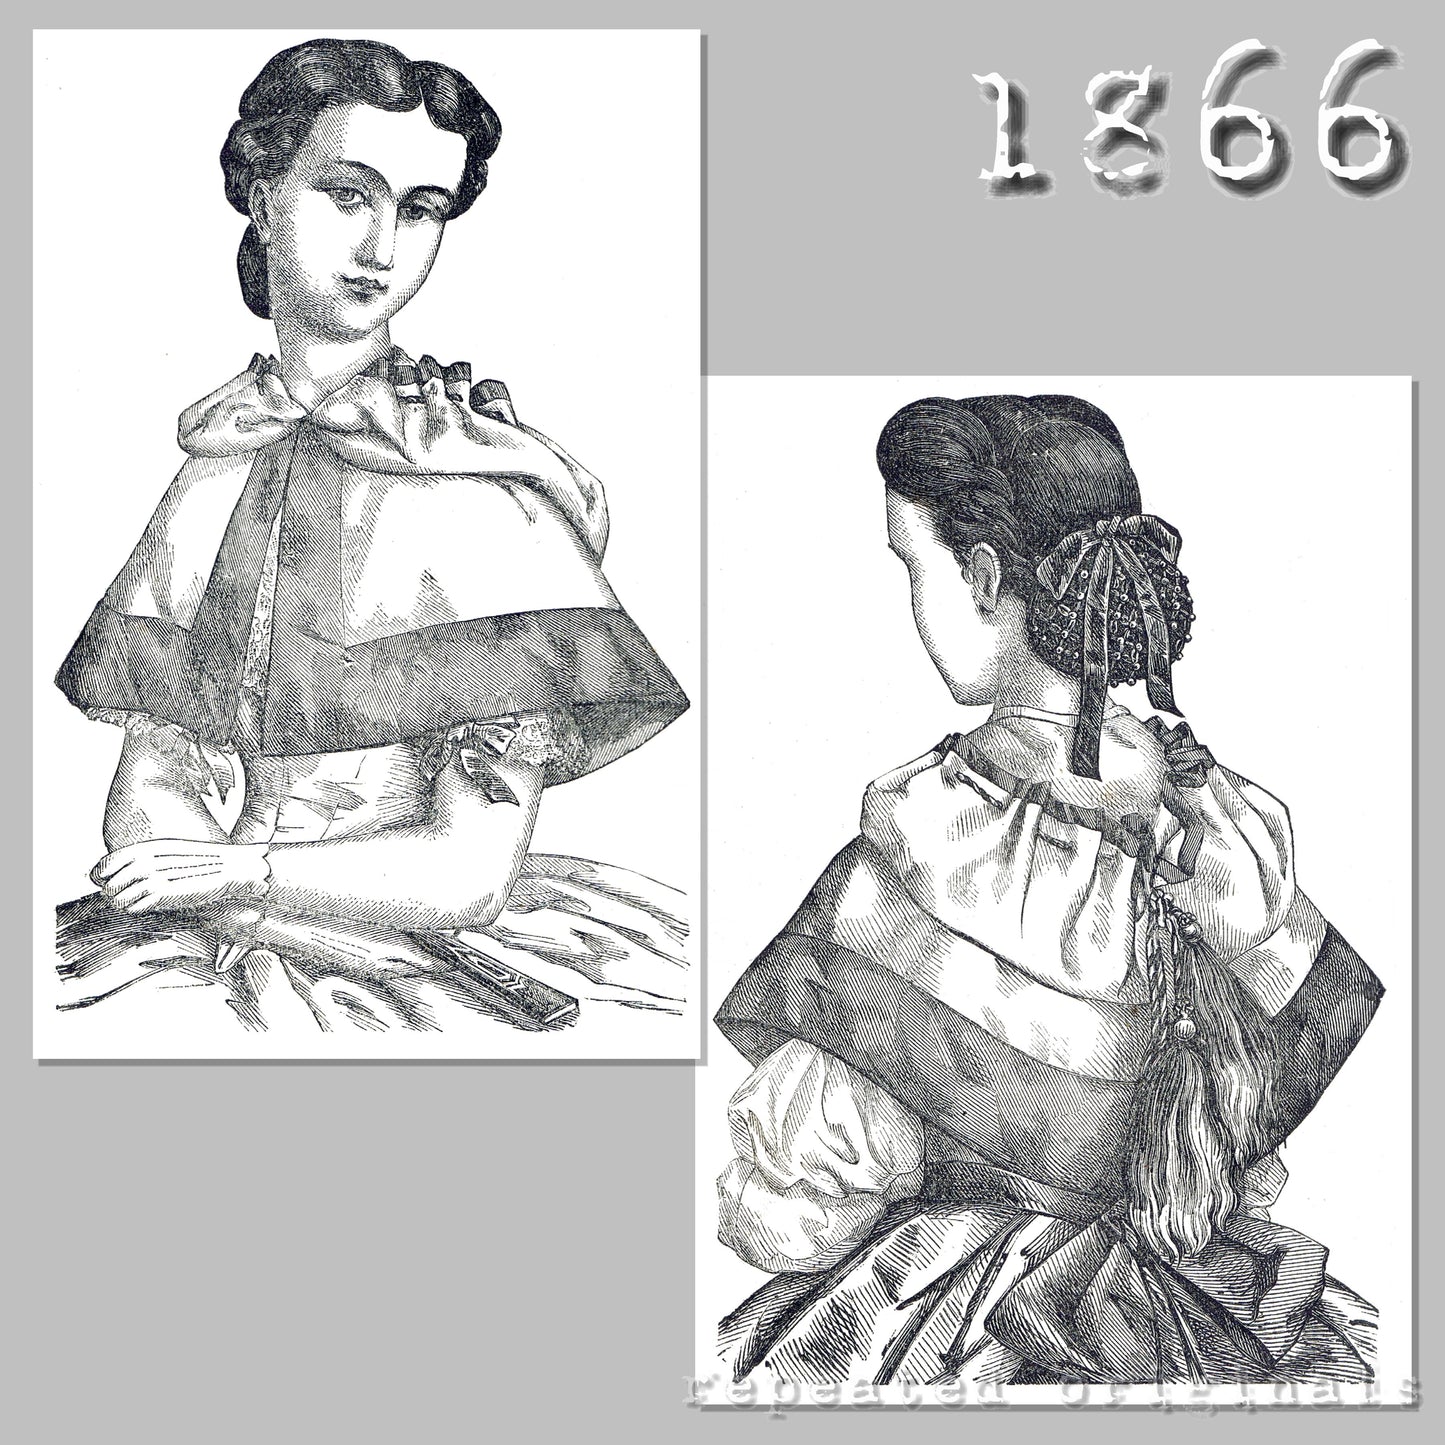 1866 Pelerine with Hood Sewing Pattern - INSTANT DOWNLOAD PDF